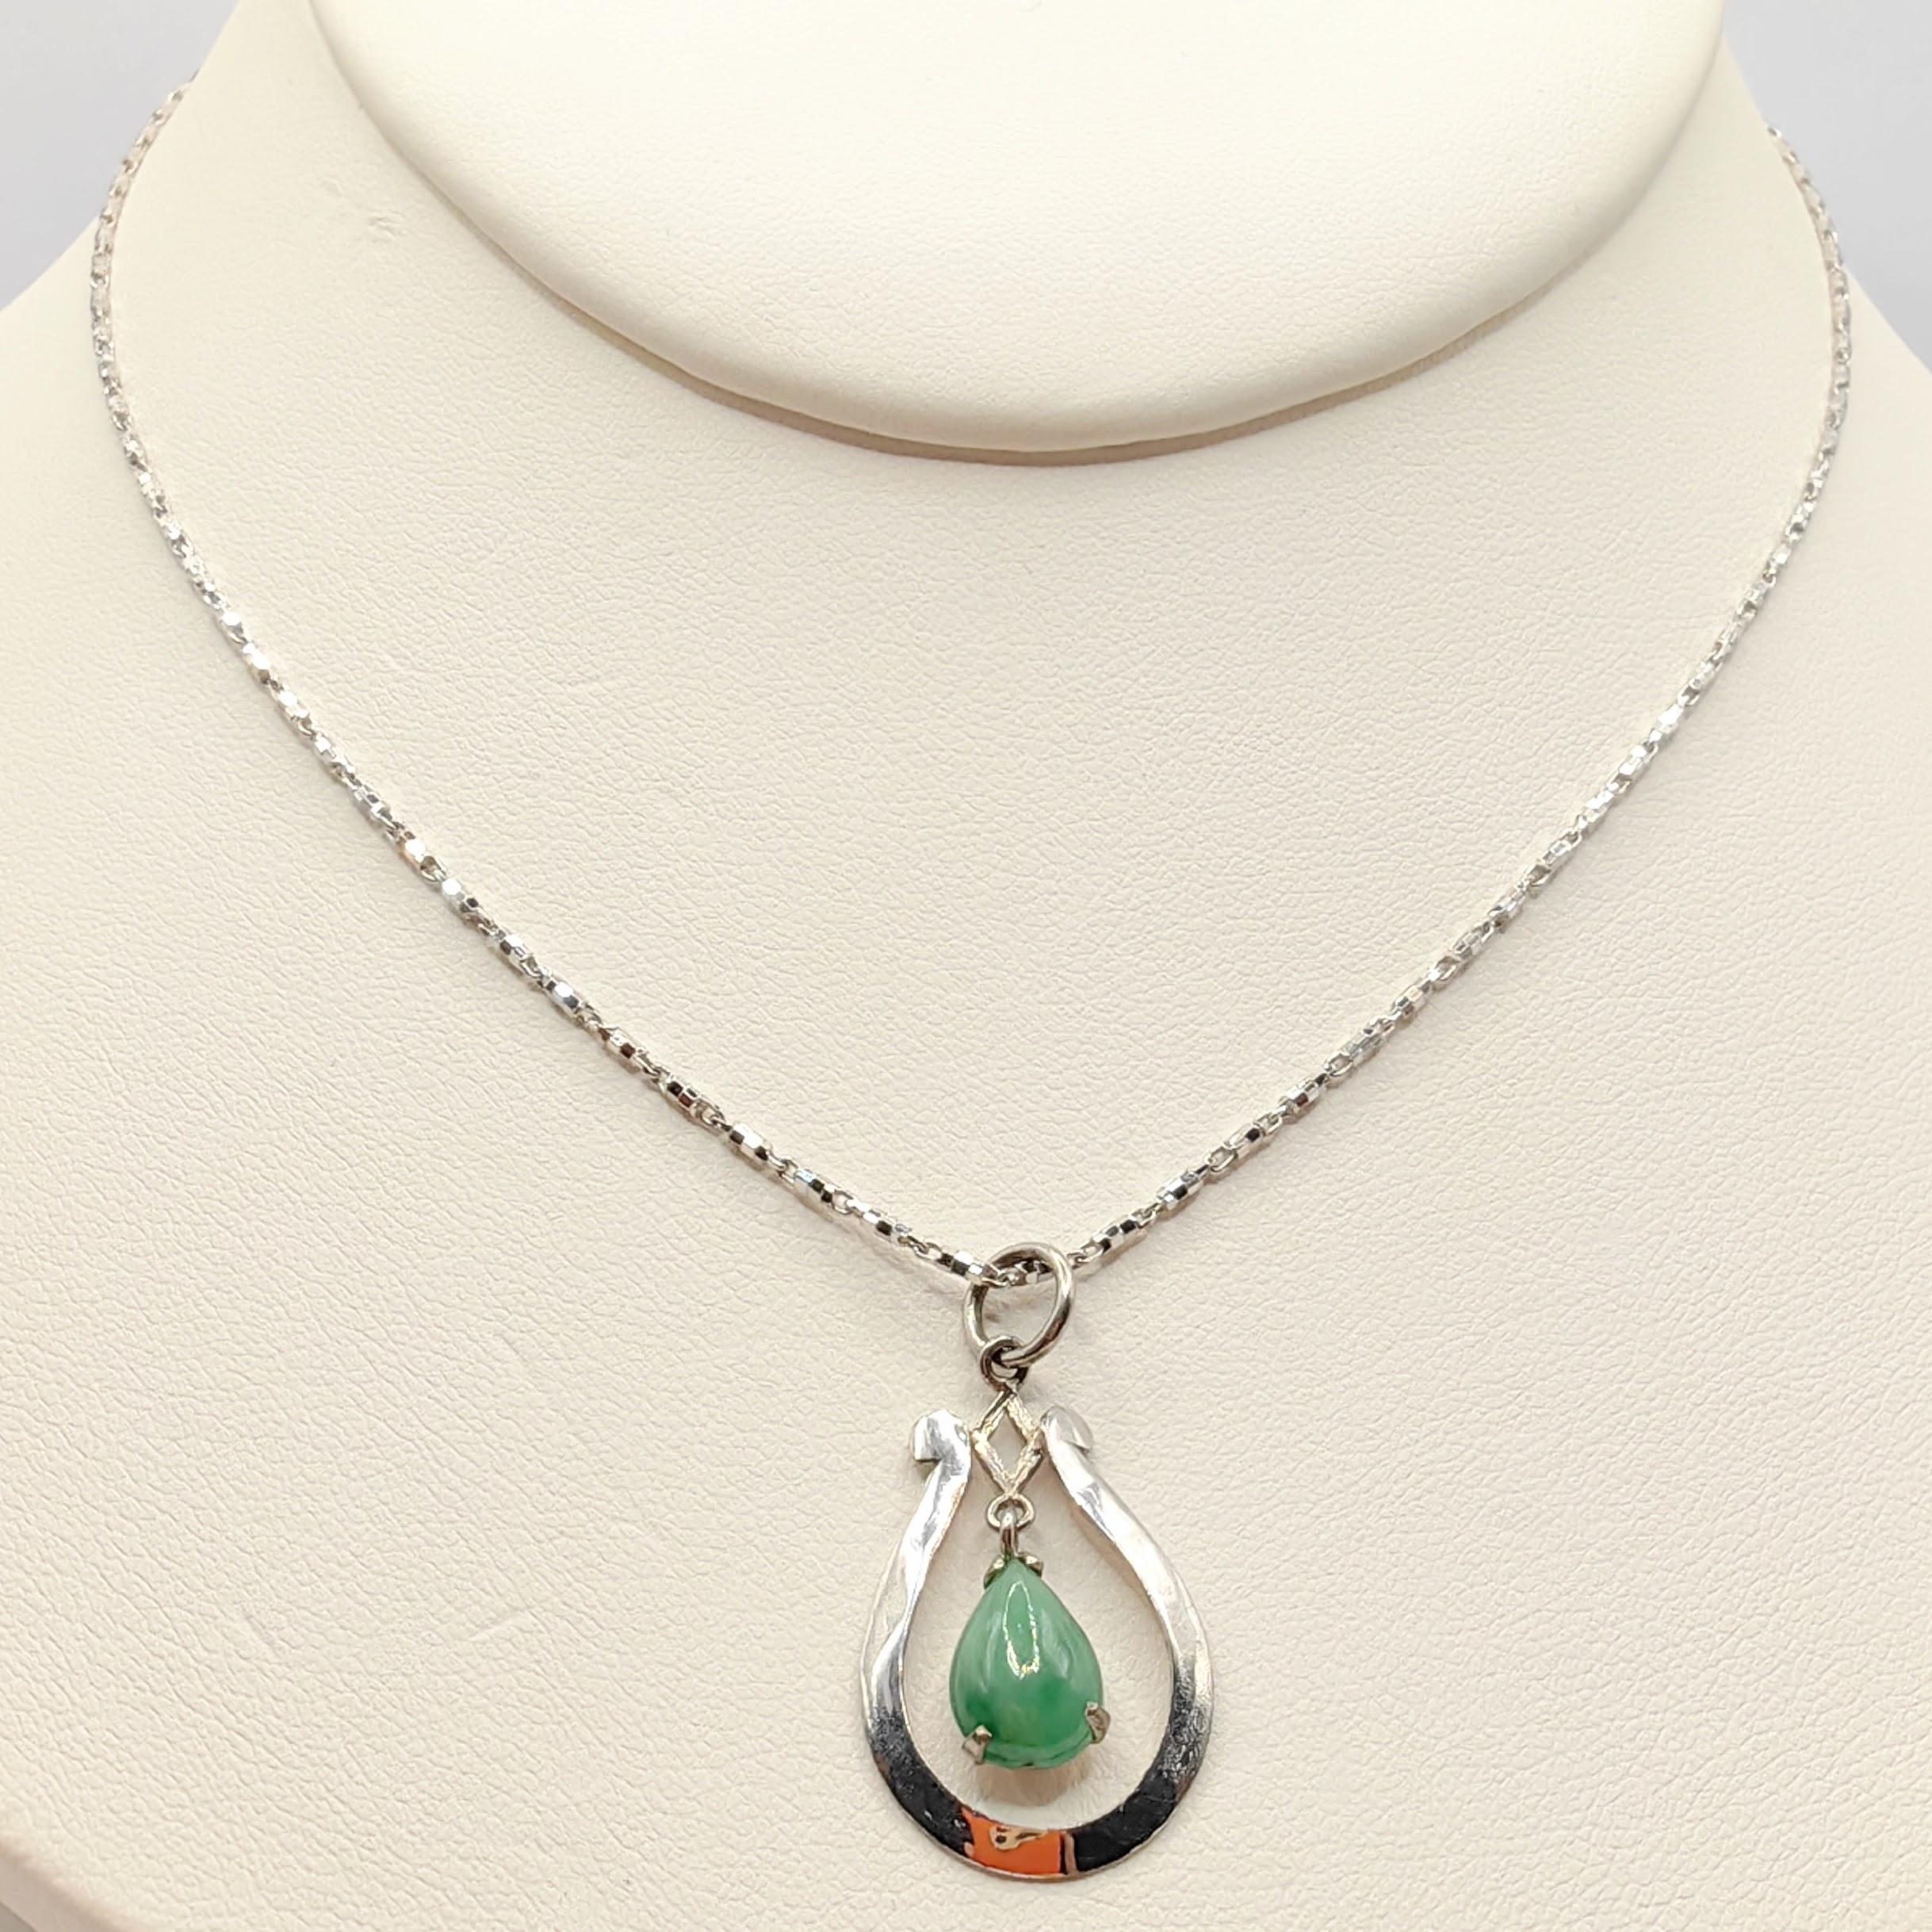 Vintage Pear Shaped Teardrop Jade Pendant in Sterling Silver For Sale 1